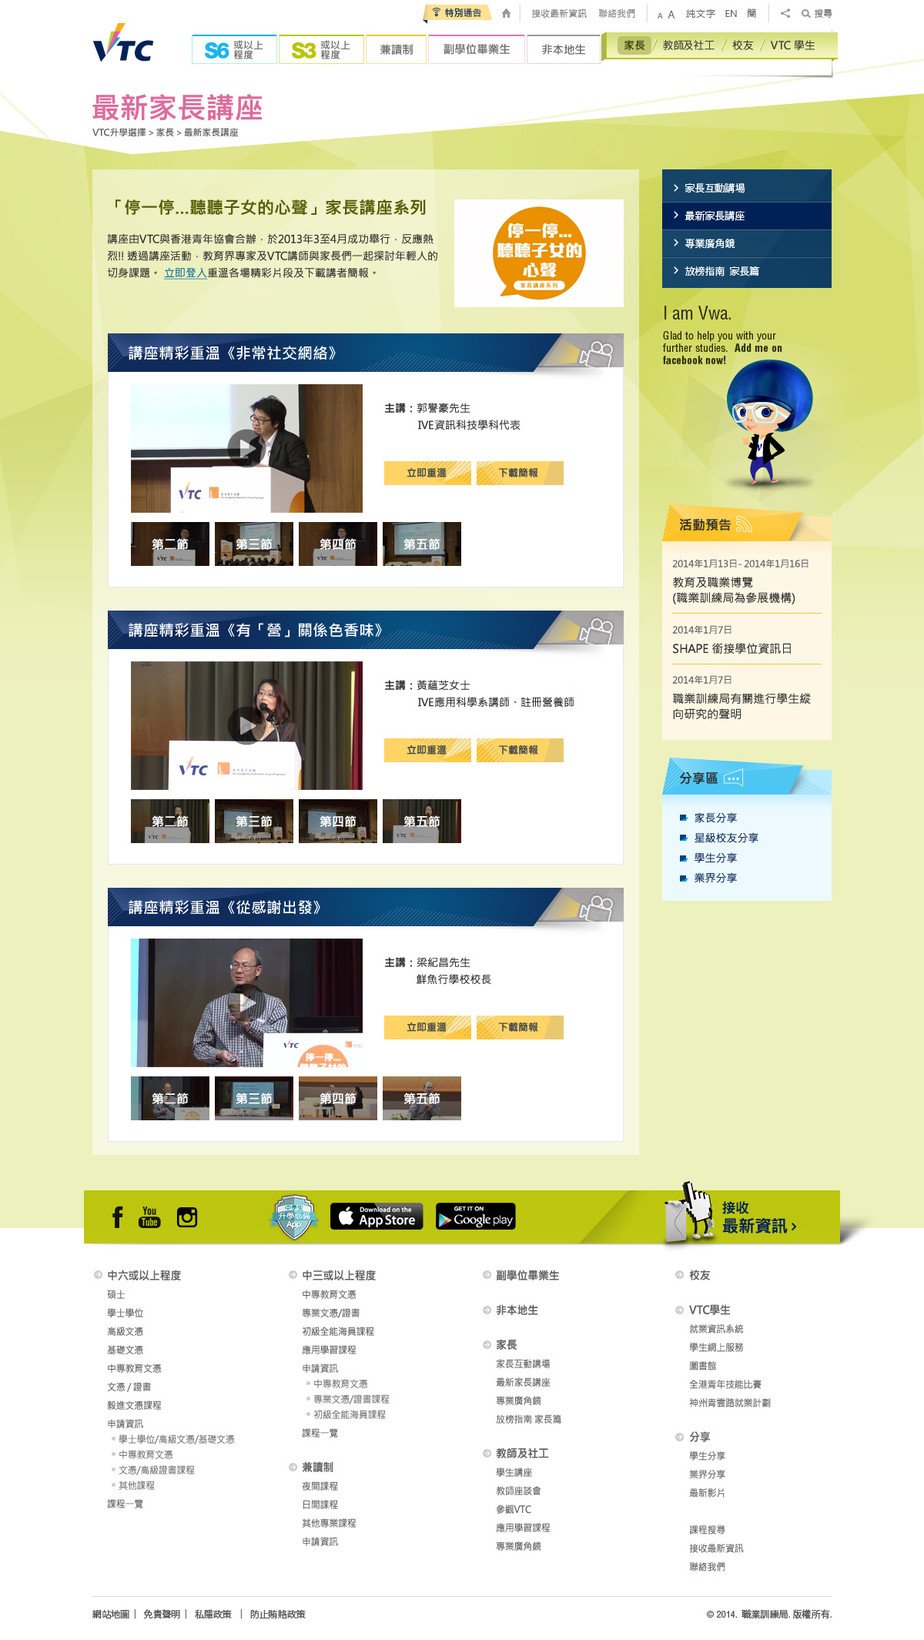 Vocational Training Council website screenshot for desktop version 3 of 8